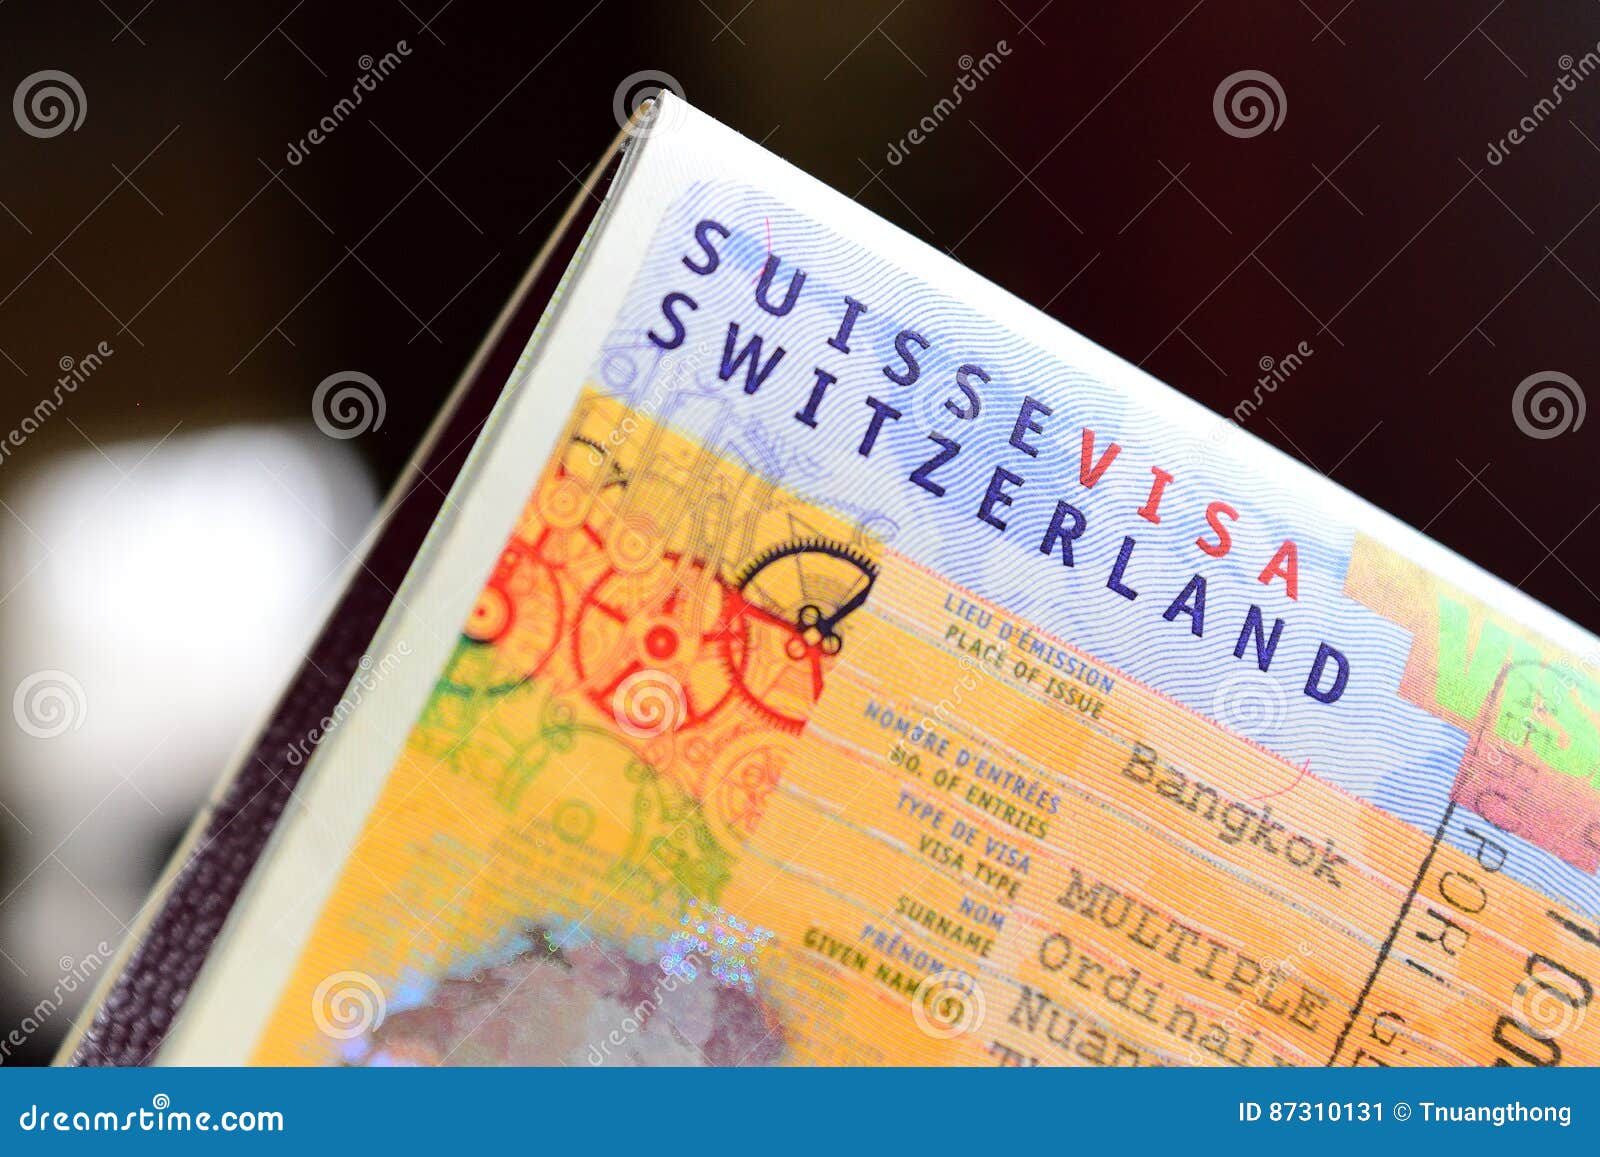 dosar visa schengen suisse anti aging